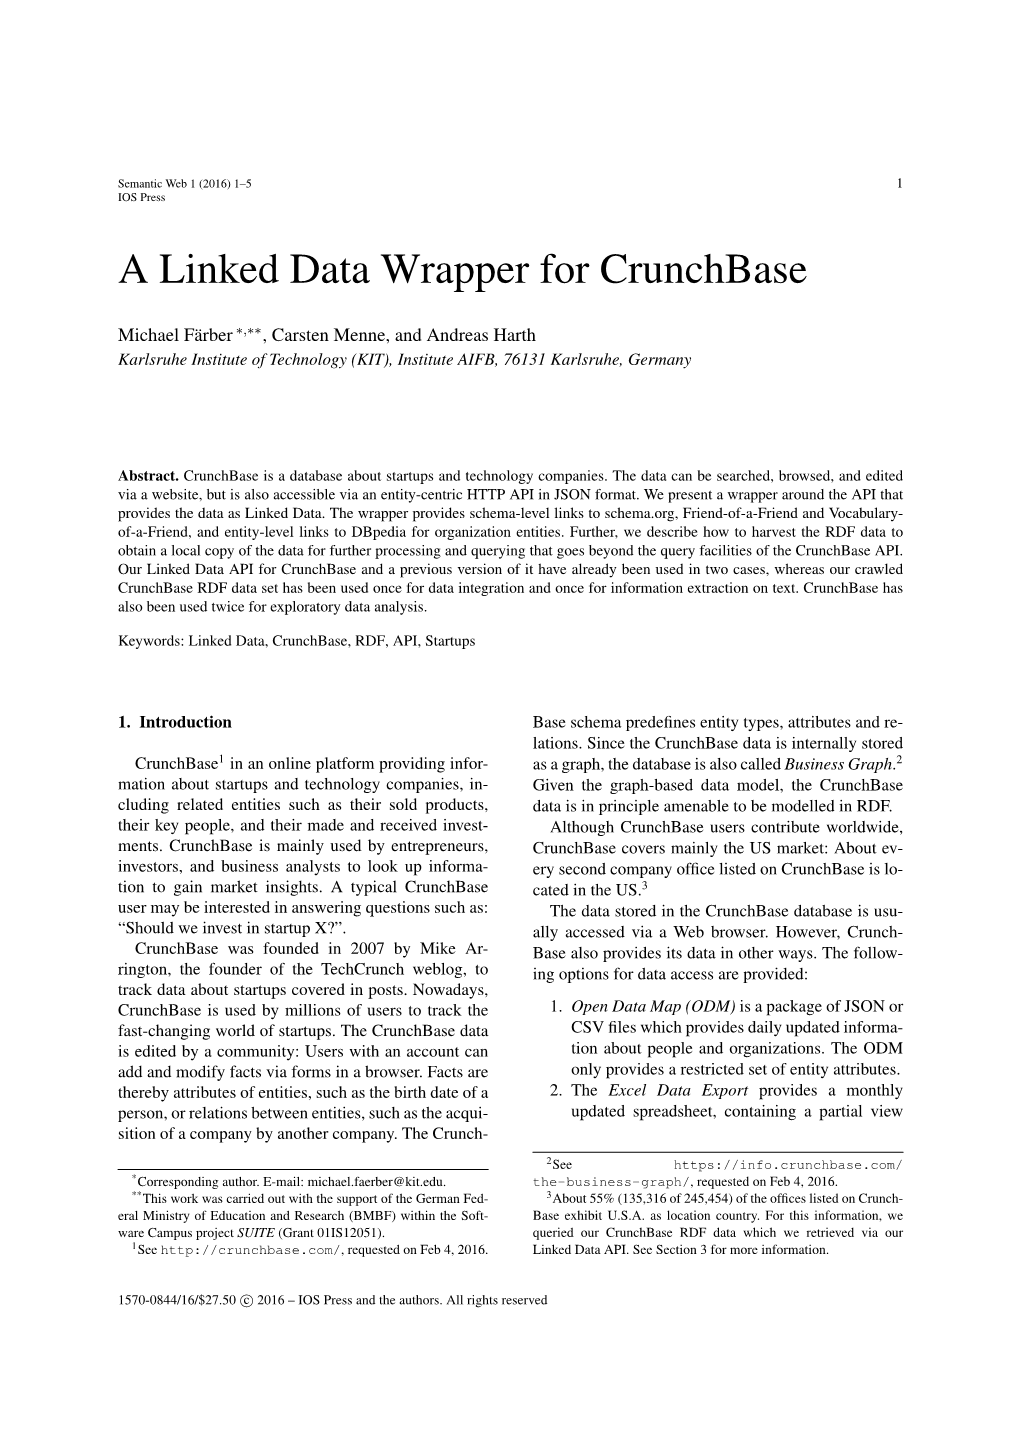 A Linked Data Wrapper for Crunchbase